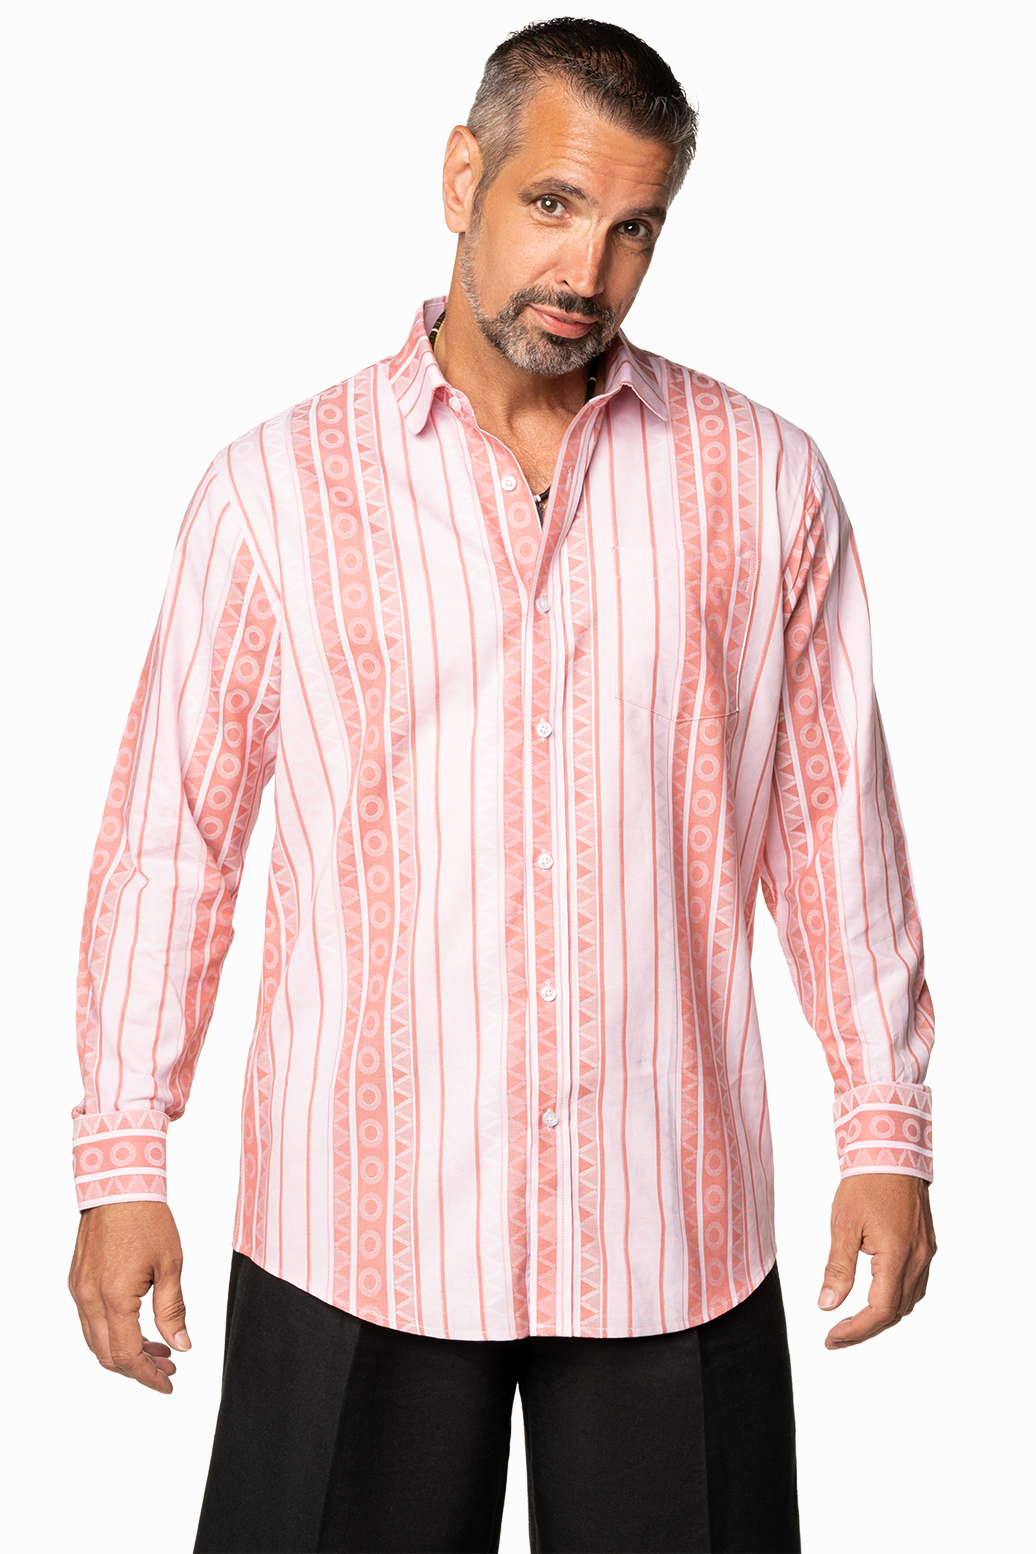 rose brick; rose-brick men's short sleeve dress shirt.